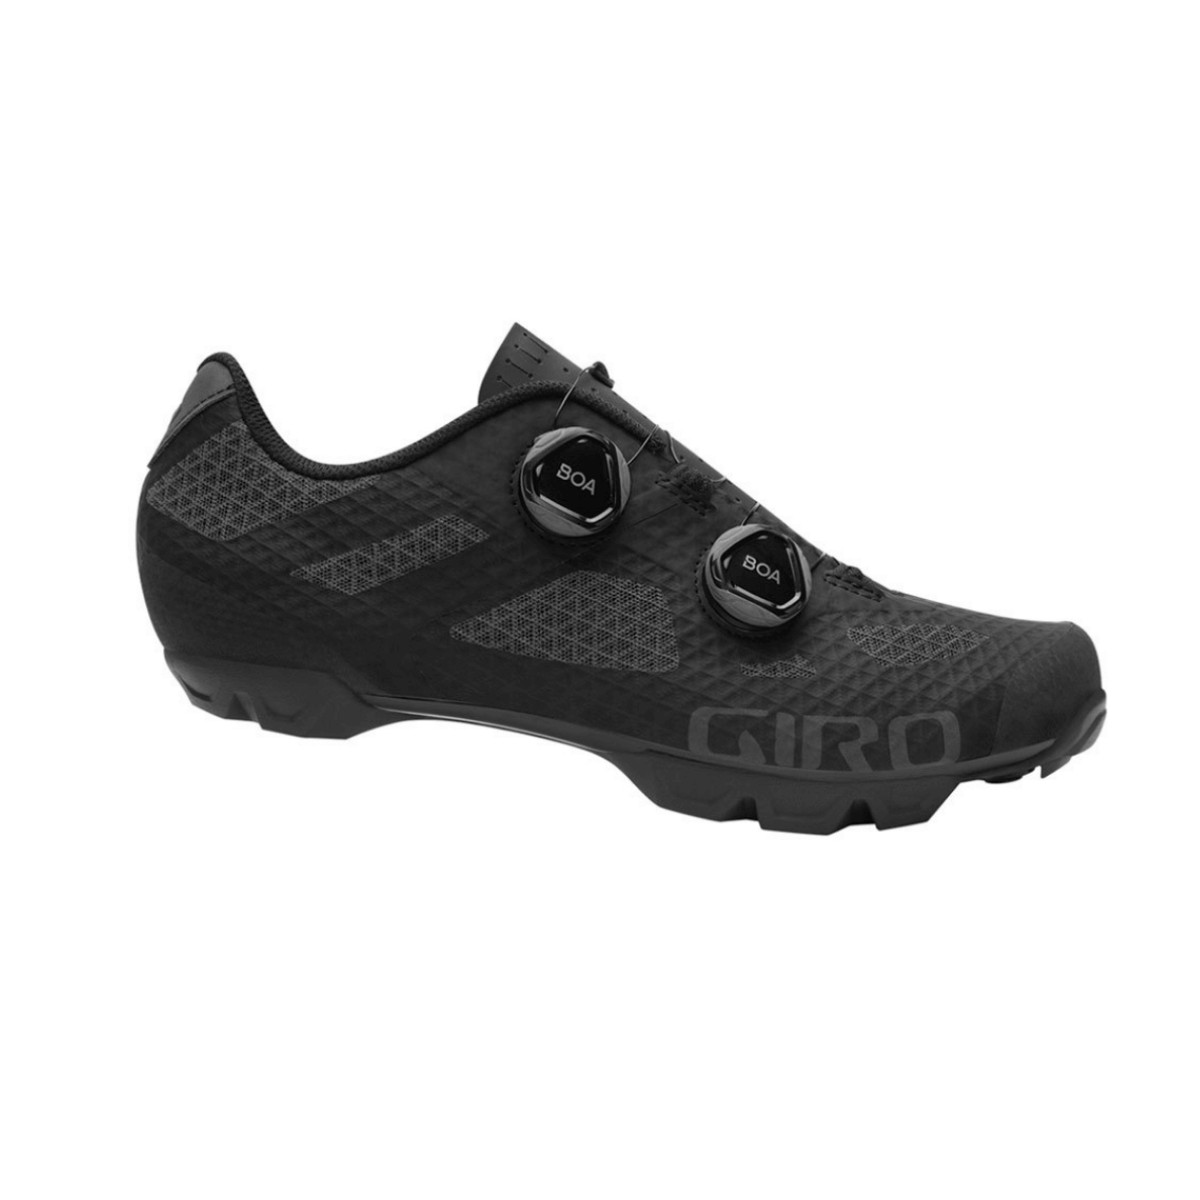 Giro Sector MTB Black Matte Shoe, Size 42 - EUR